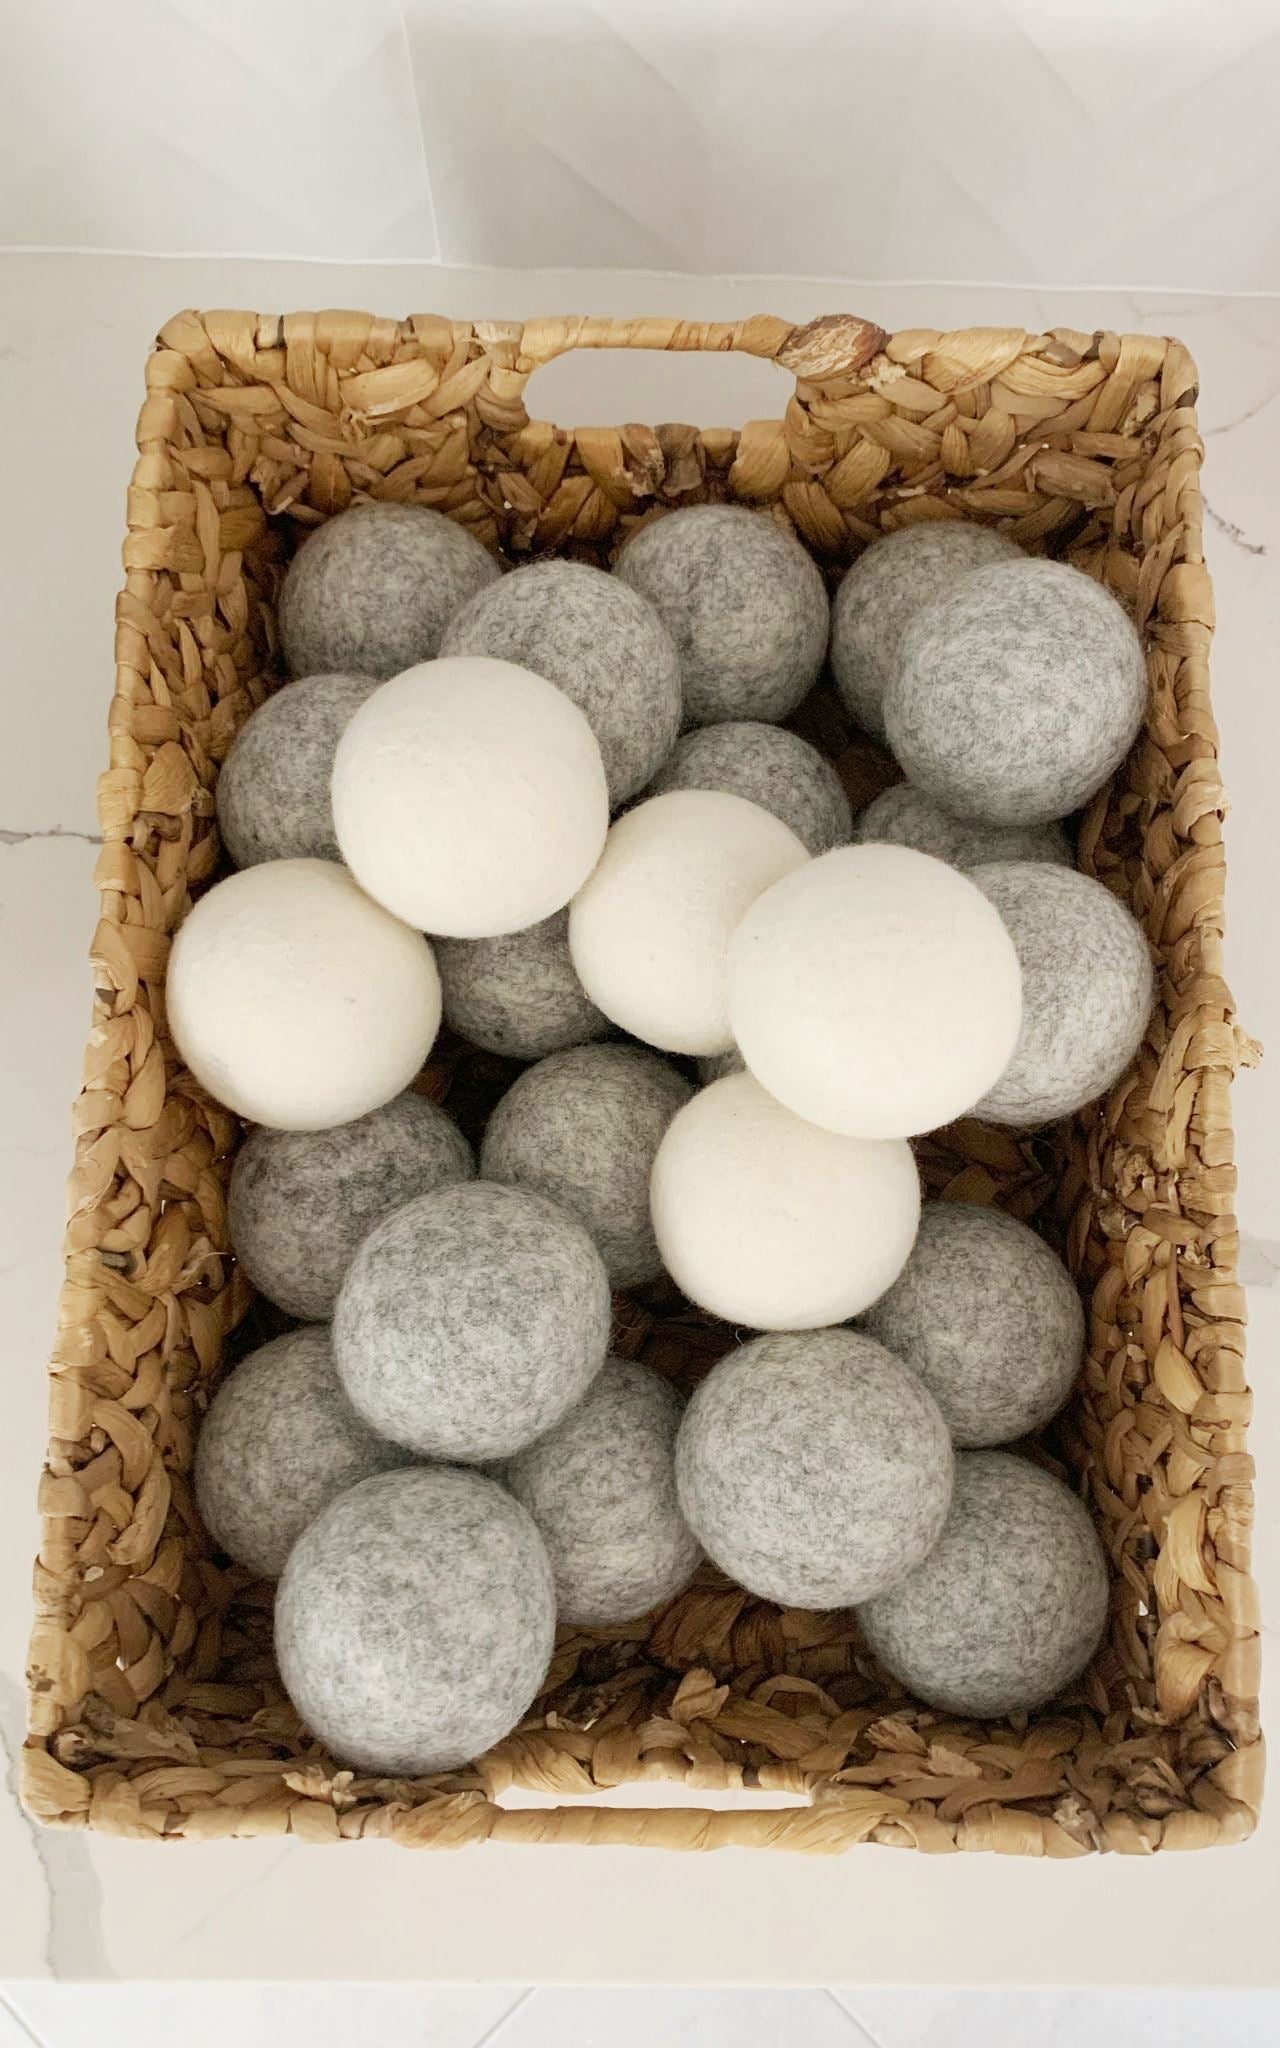 Surya Australia Fairtrade Wool Felt Dryer Balls from Nepal